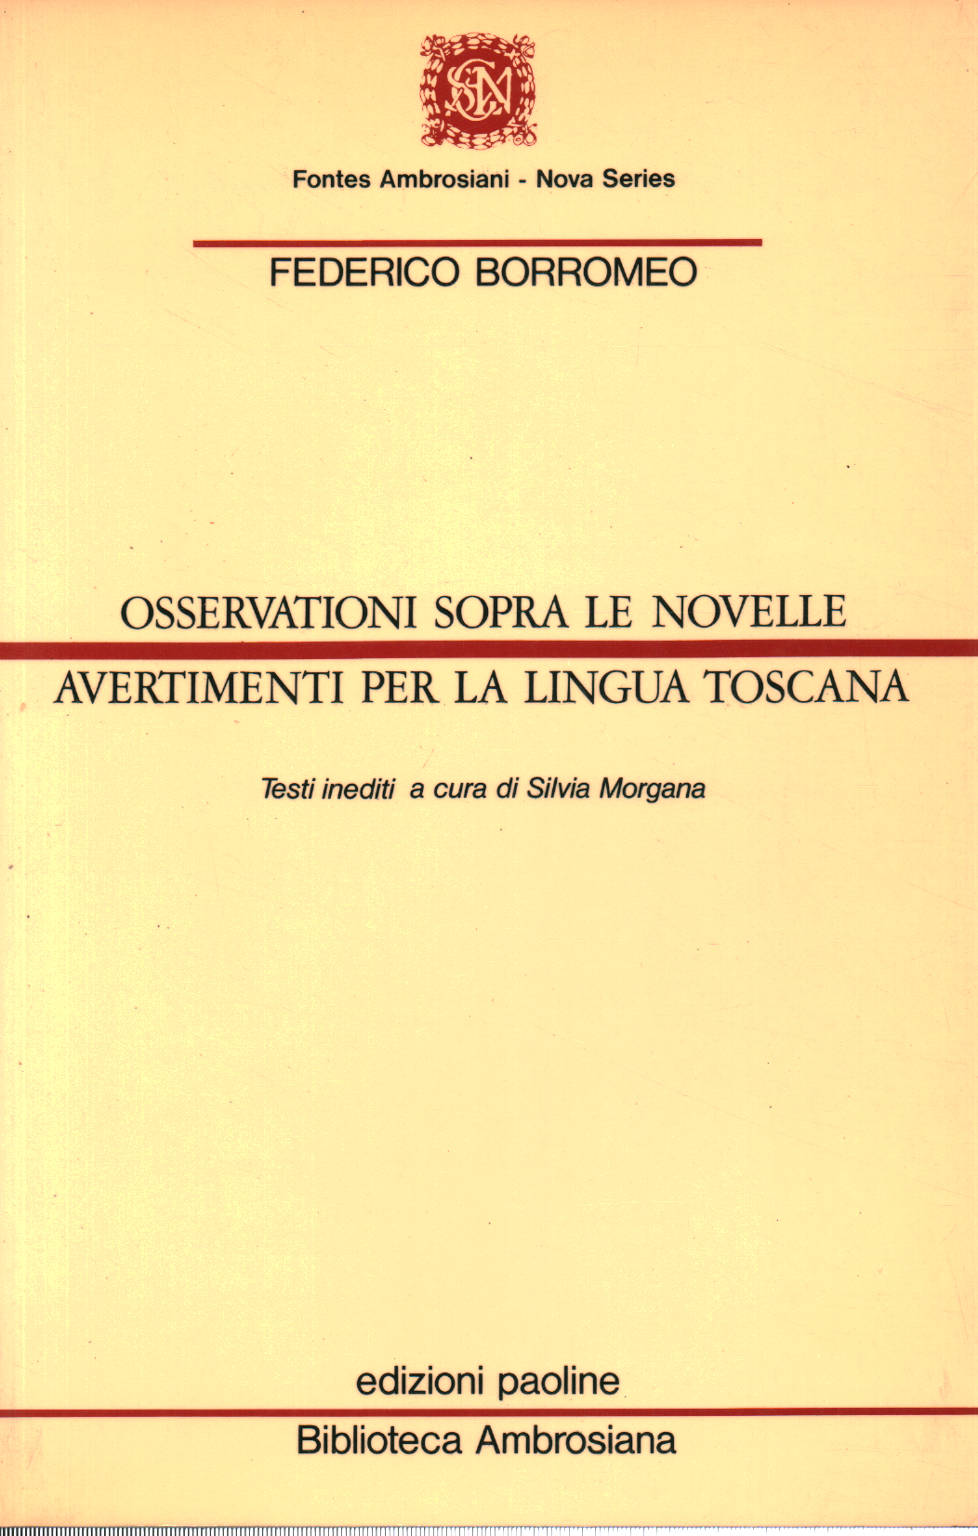 Osservazioni sopra le novelle, Federico Borromeo